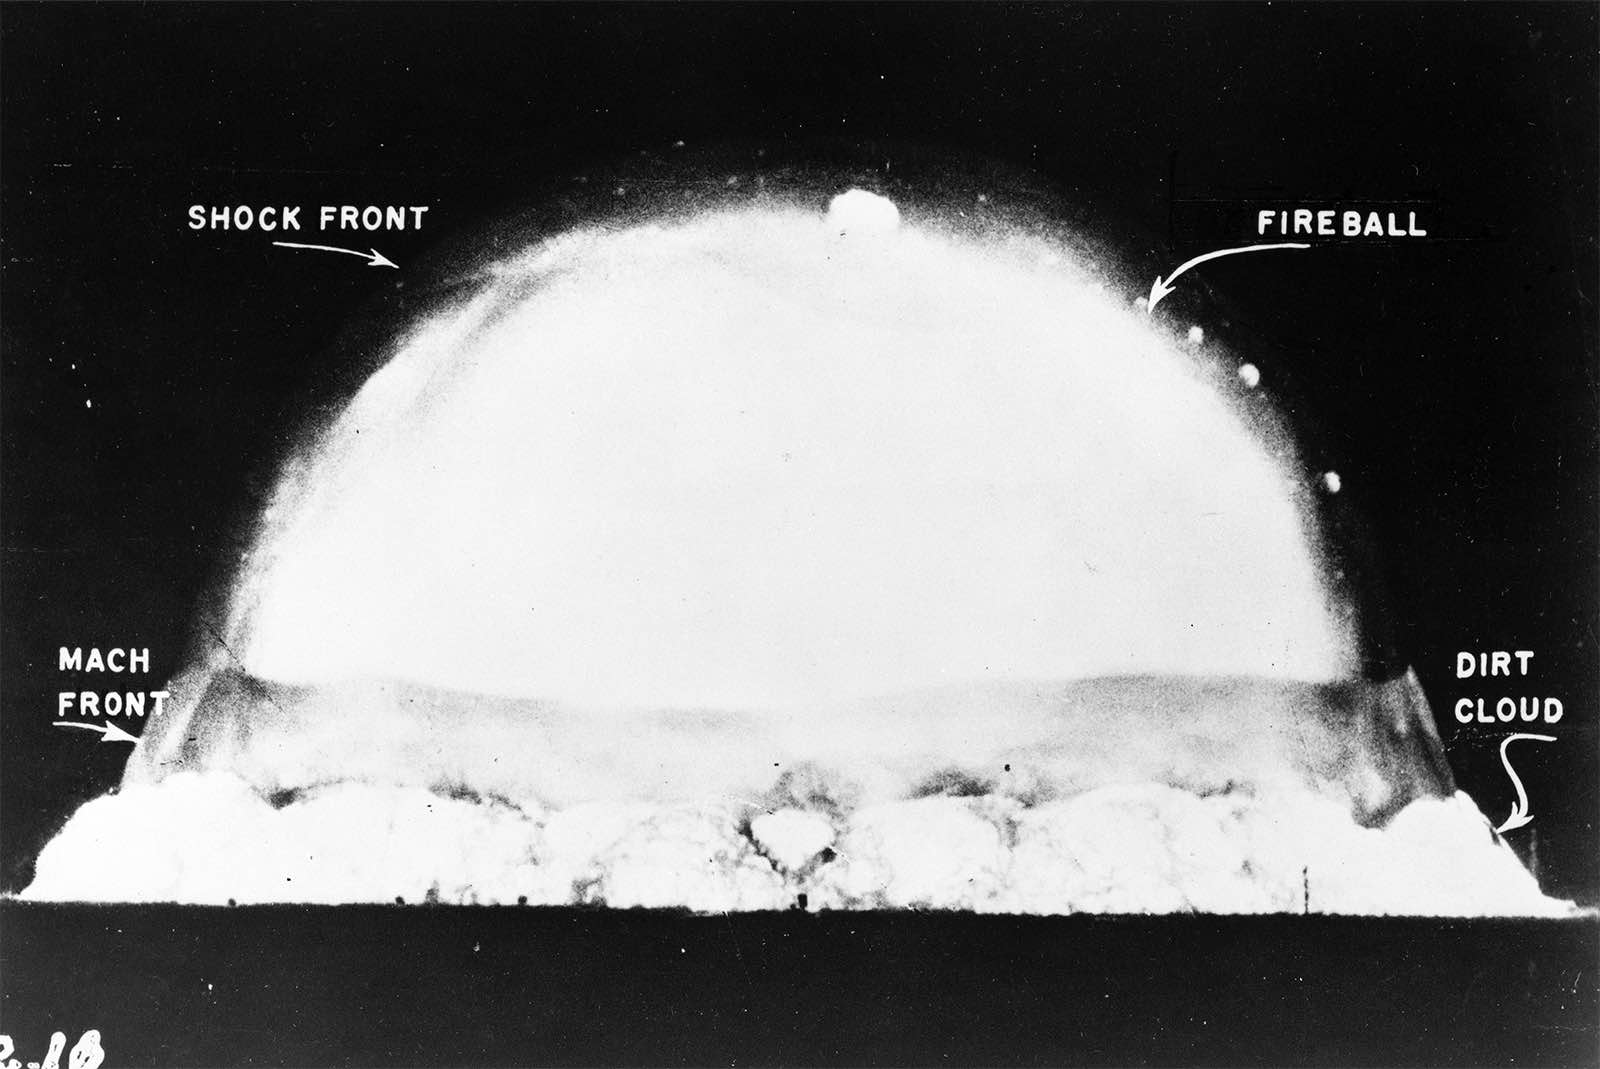 The fireball shortly after detonation.